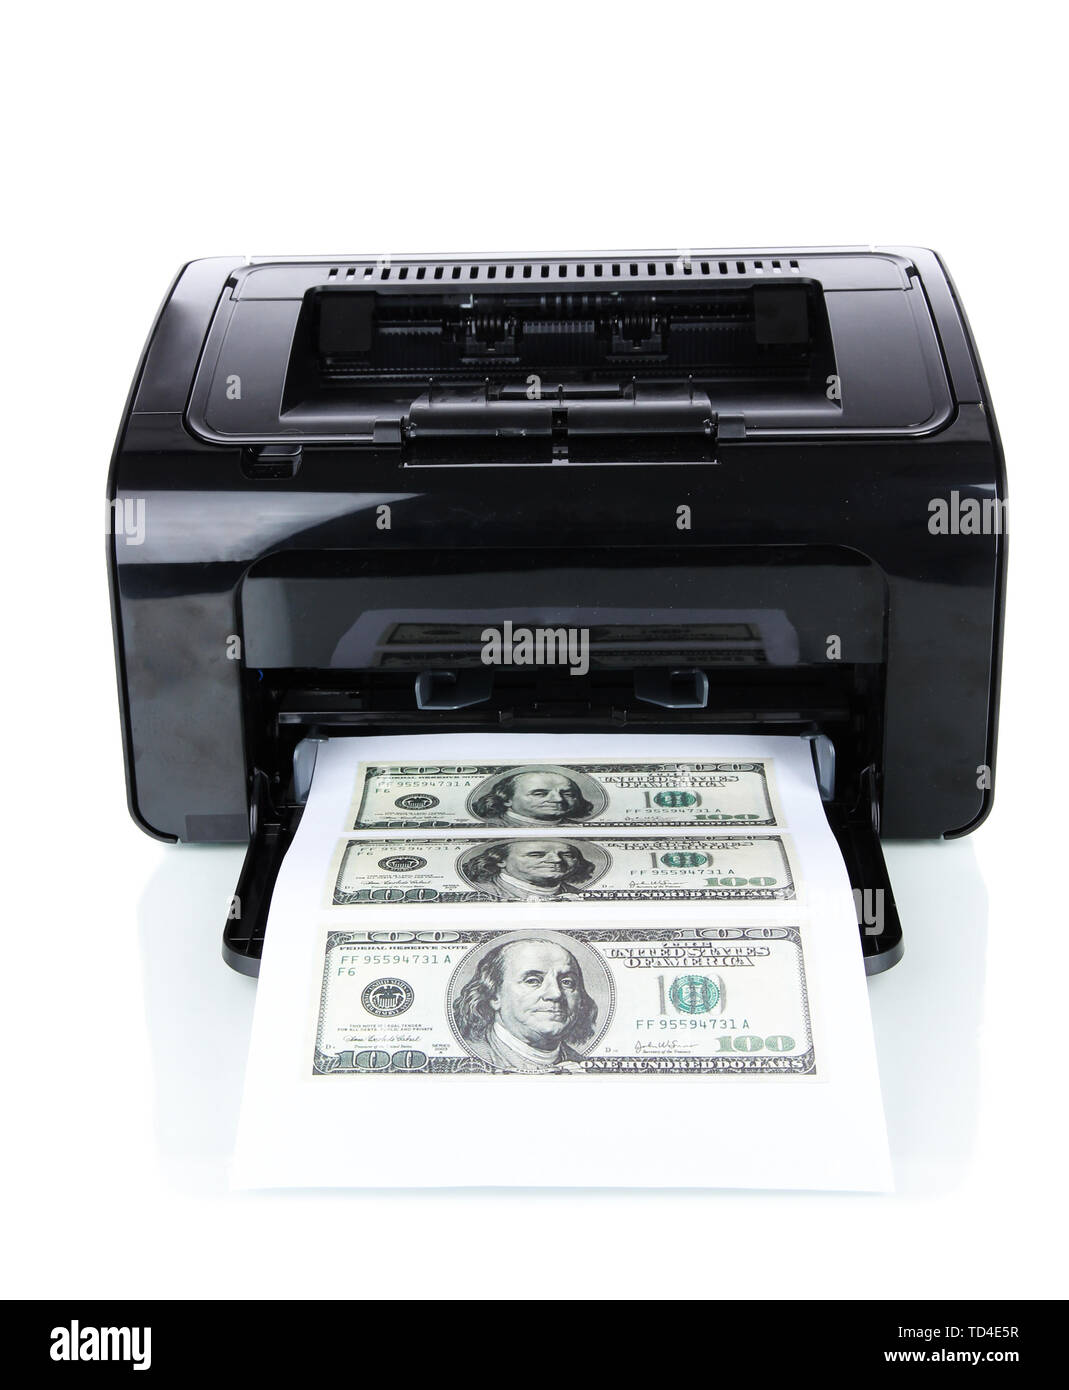 best printer for making fake ids